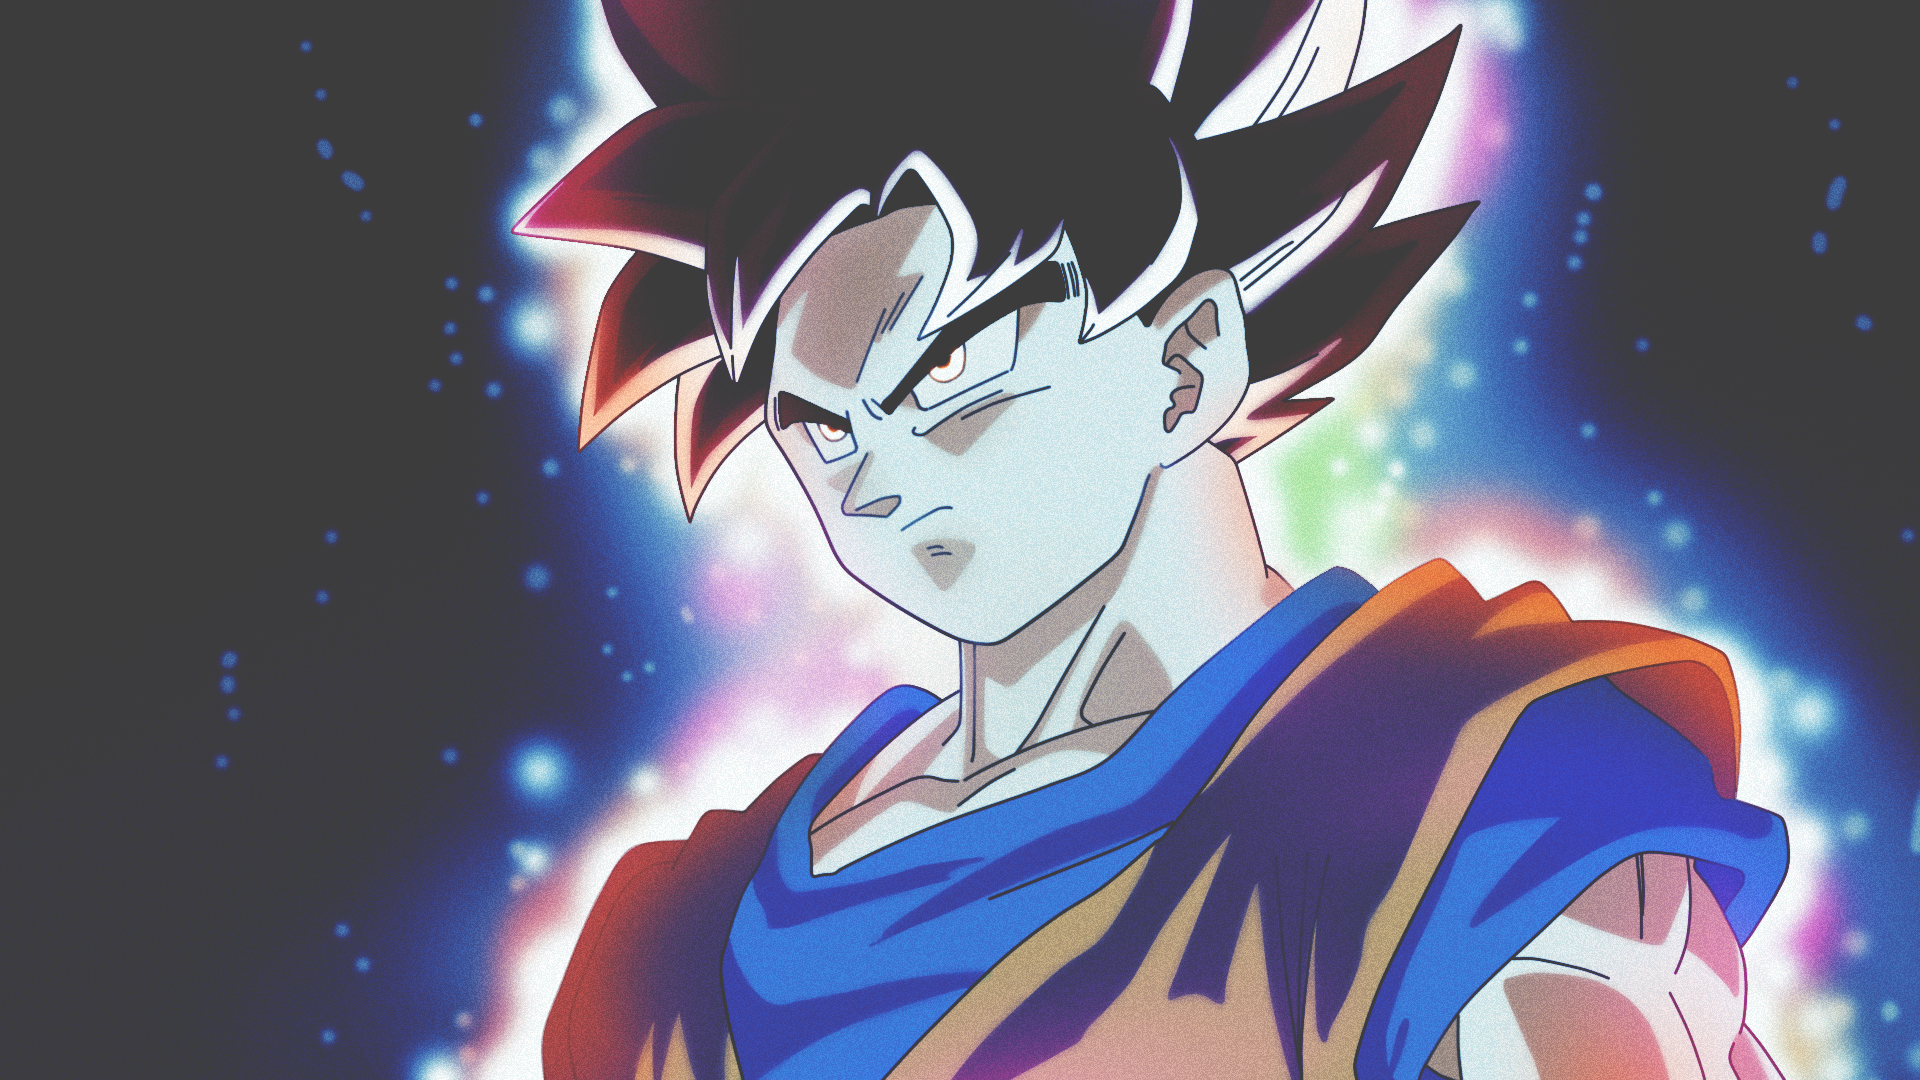 Goku 2 by Emericsson on DeviantArt